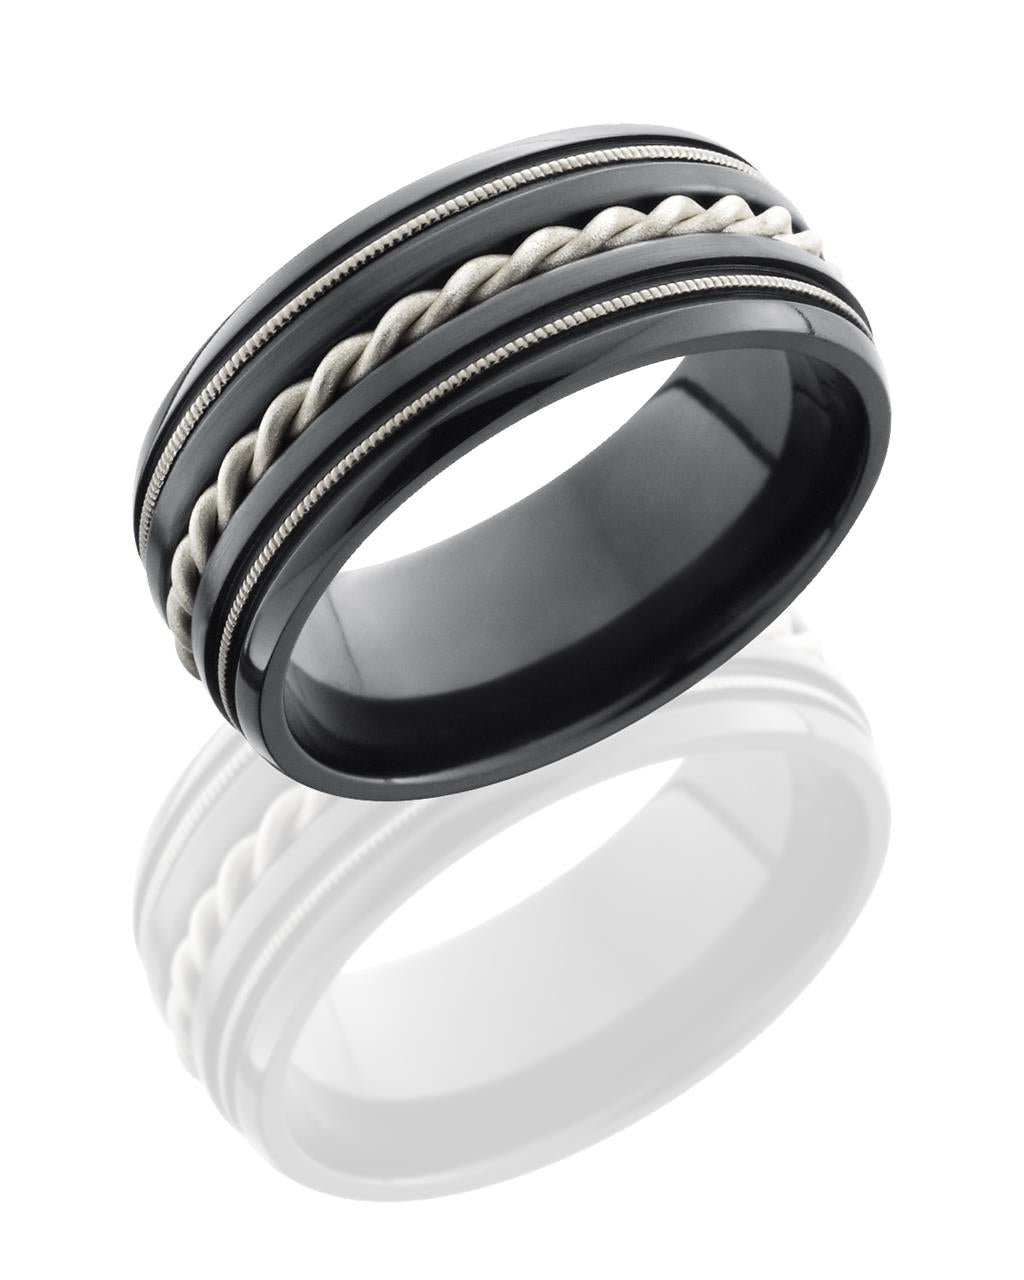 Black Zirconium Alternative Metal Ring 9mm wide Size 10.75